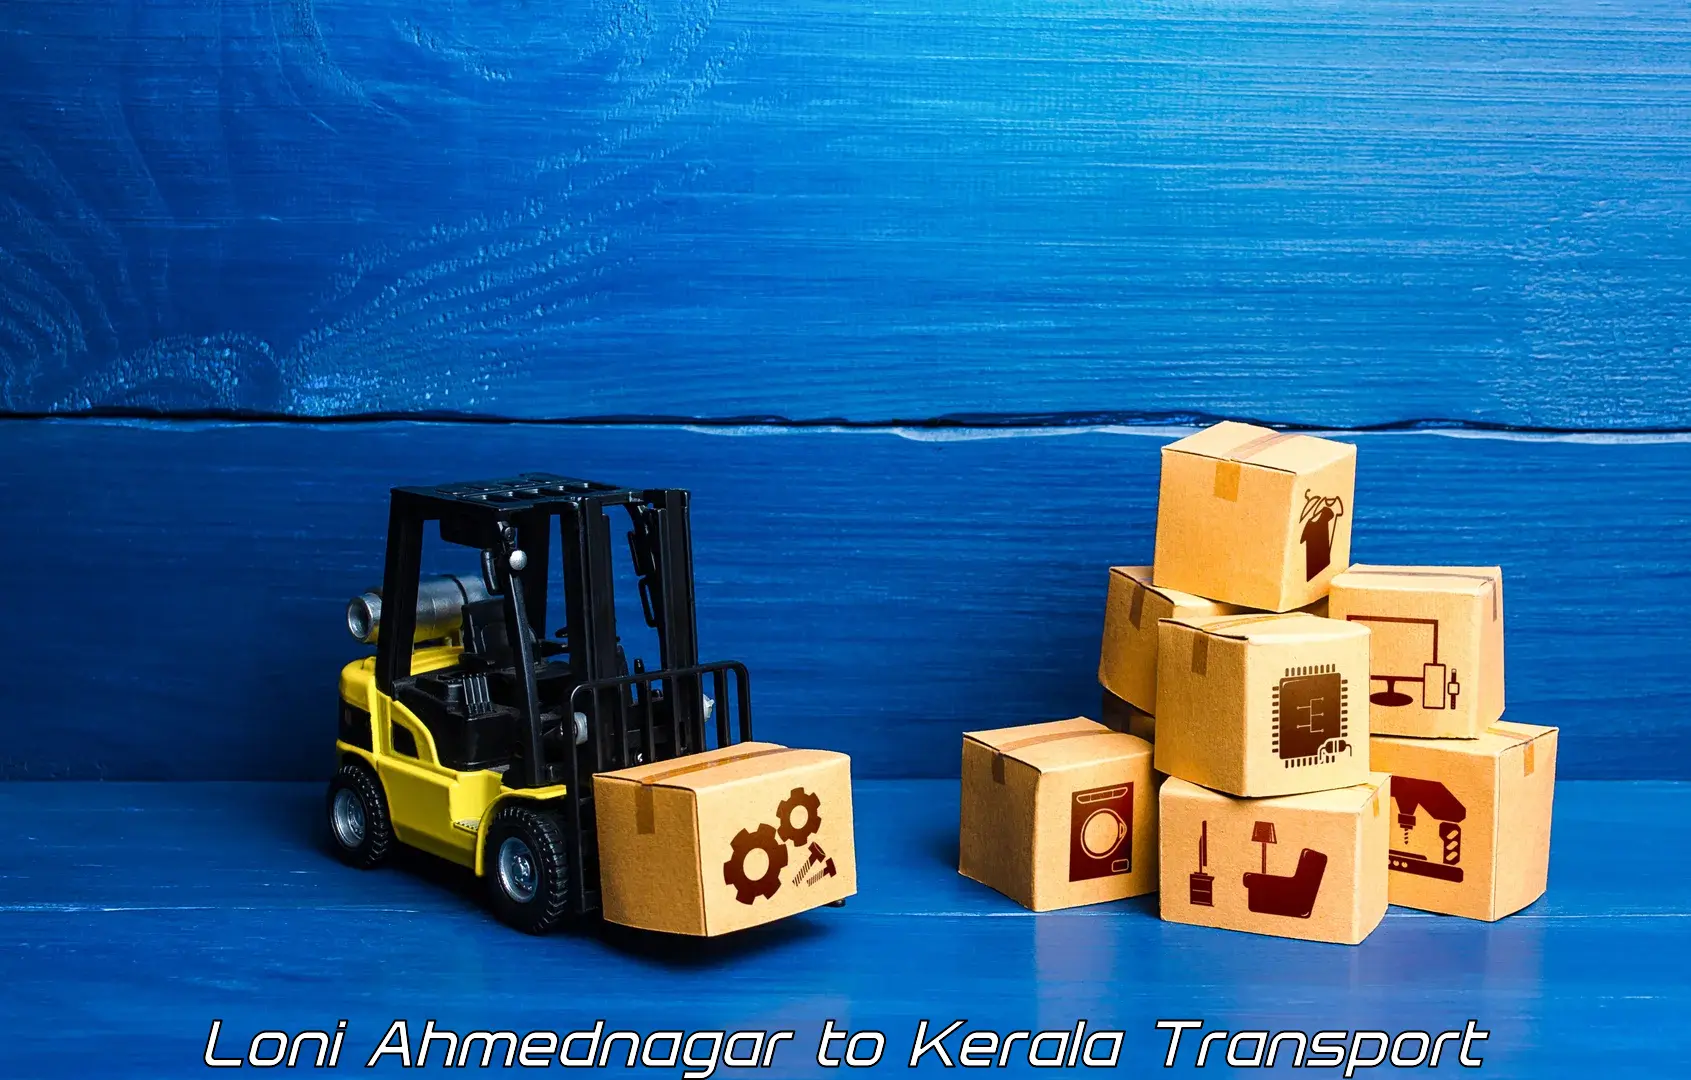 Container transport service Loni Ahmednagar to Kochi